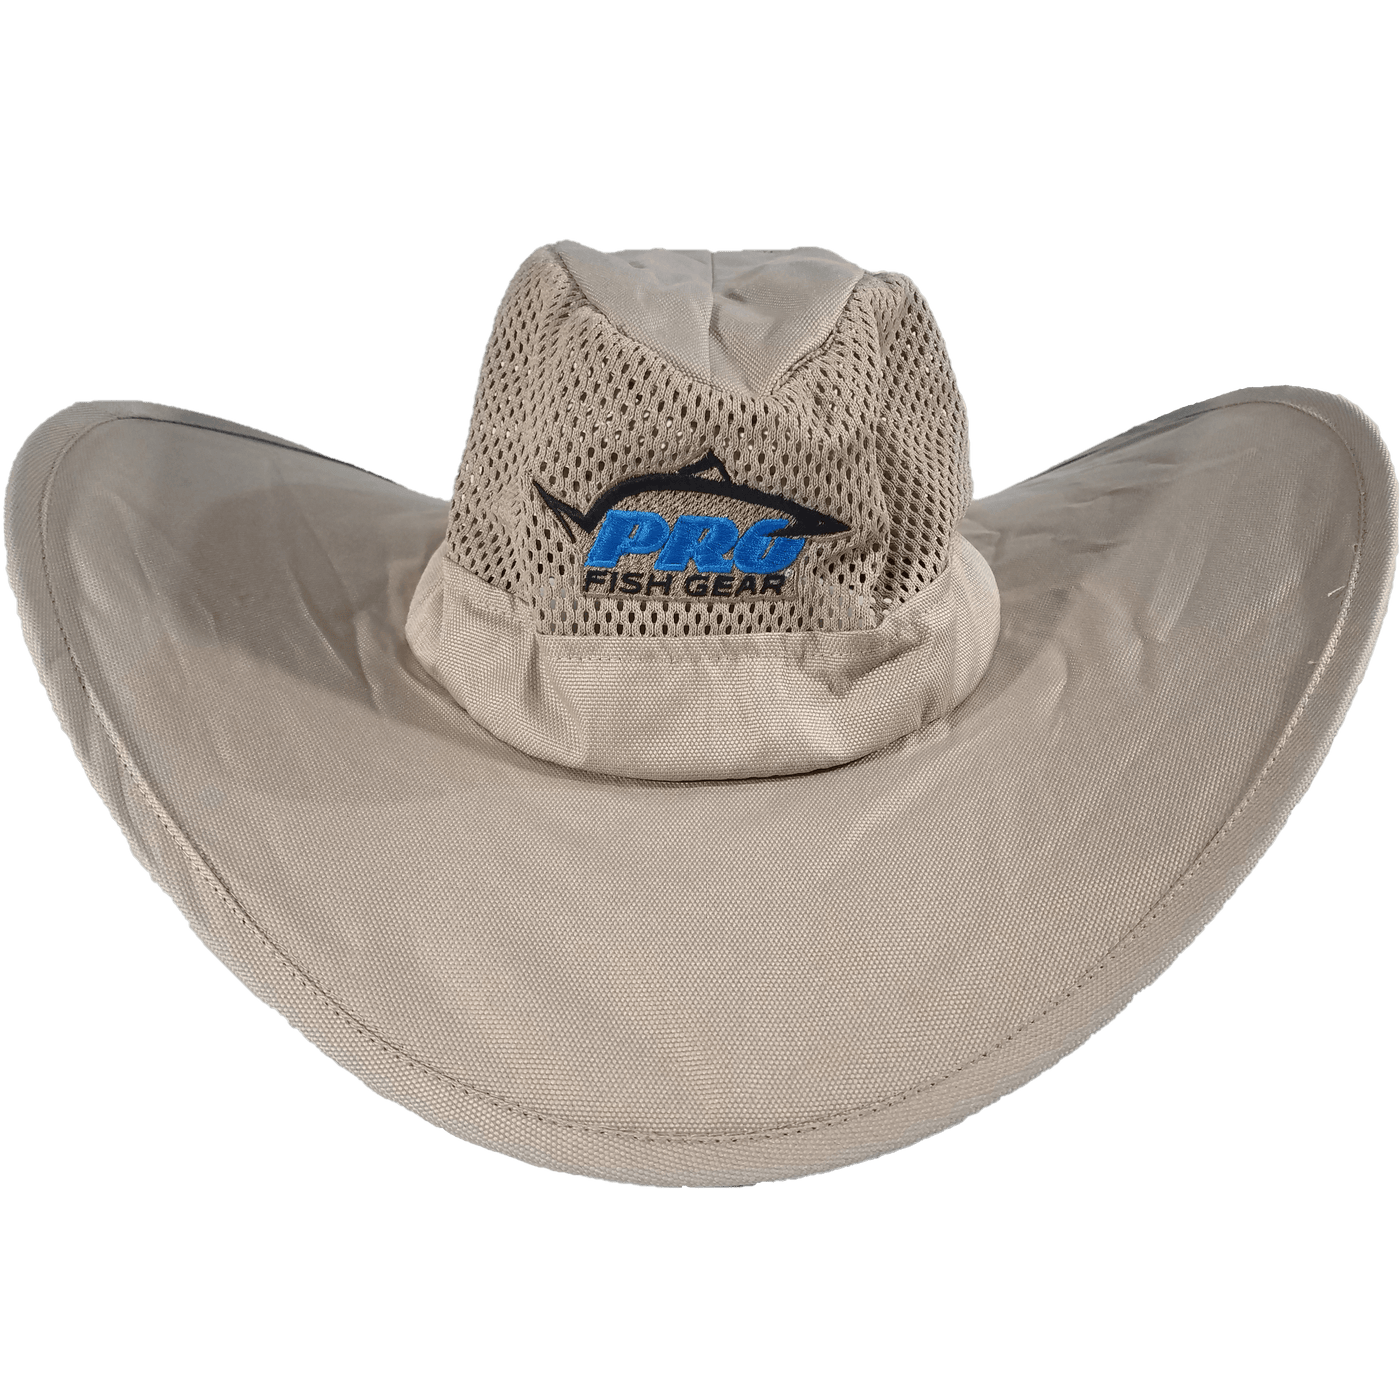 *NEW* Pro Fish Gear Pop Hat Packable Sun Hat - Khaki Hats Pro Fish Gear 